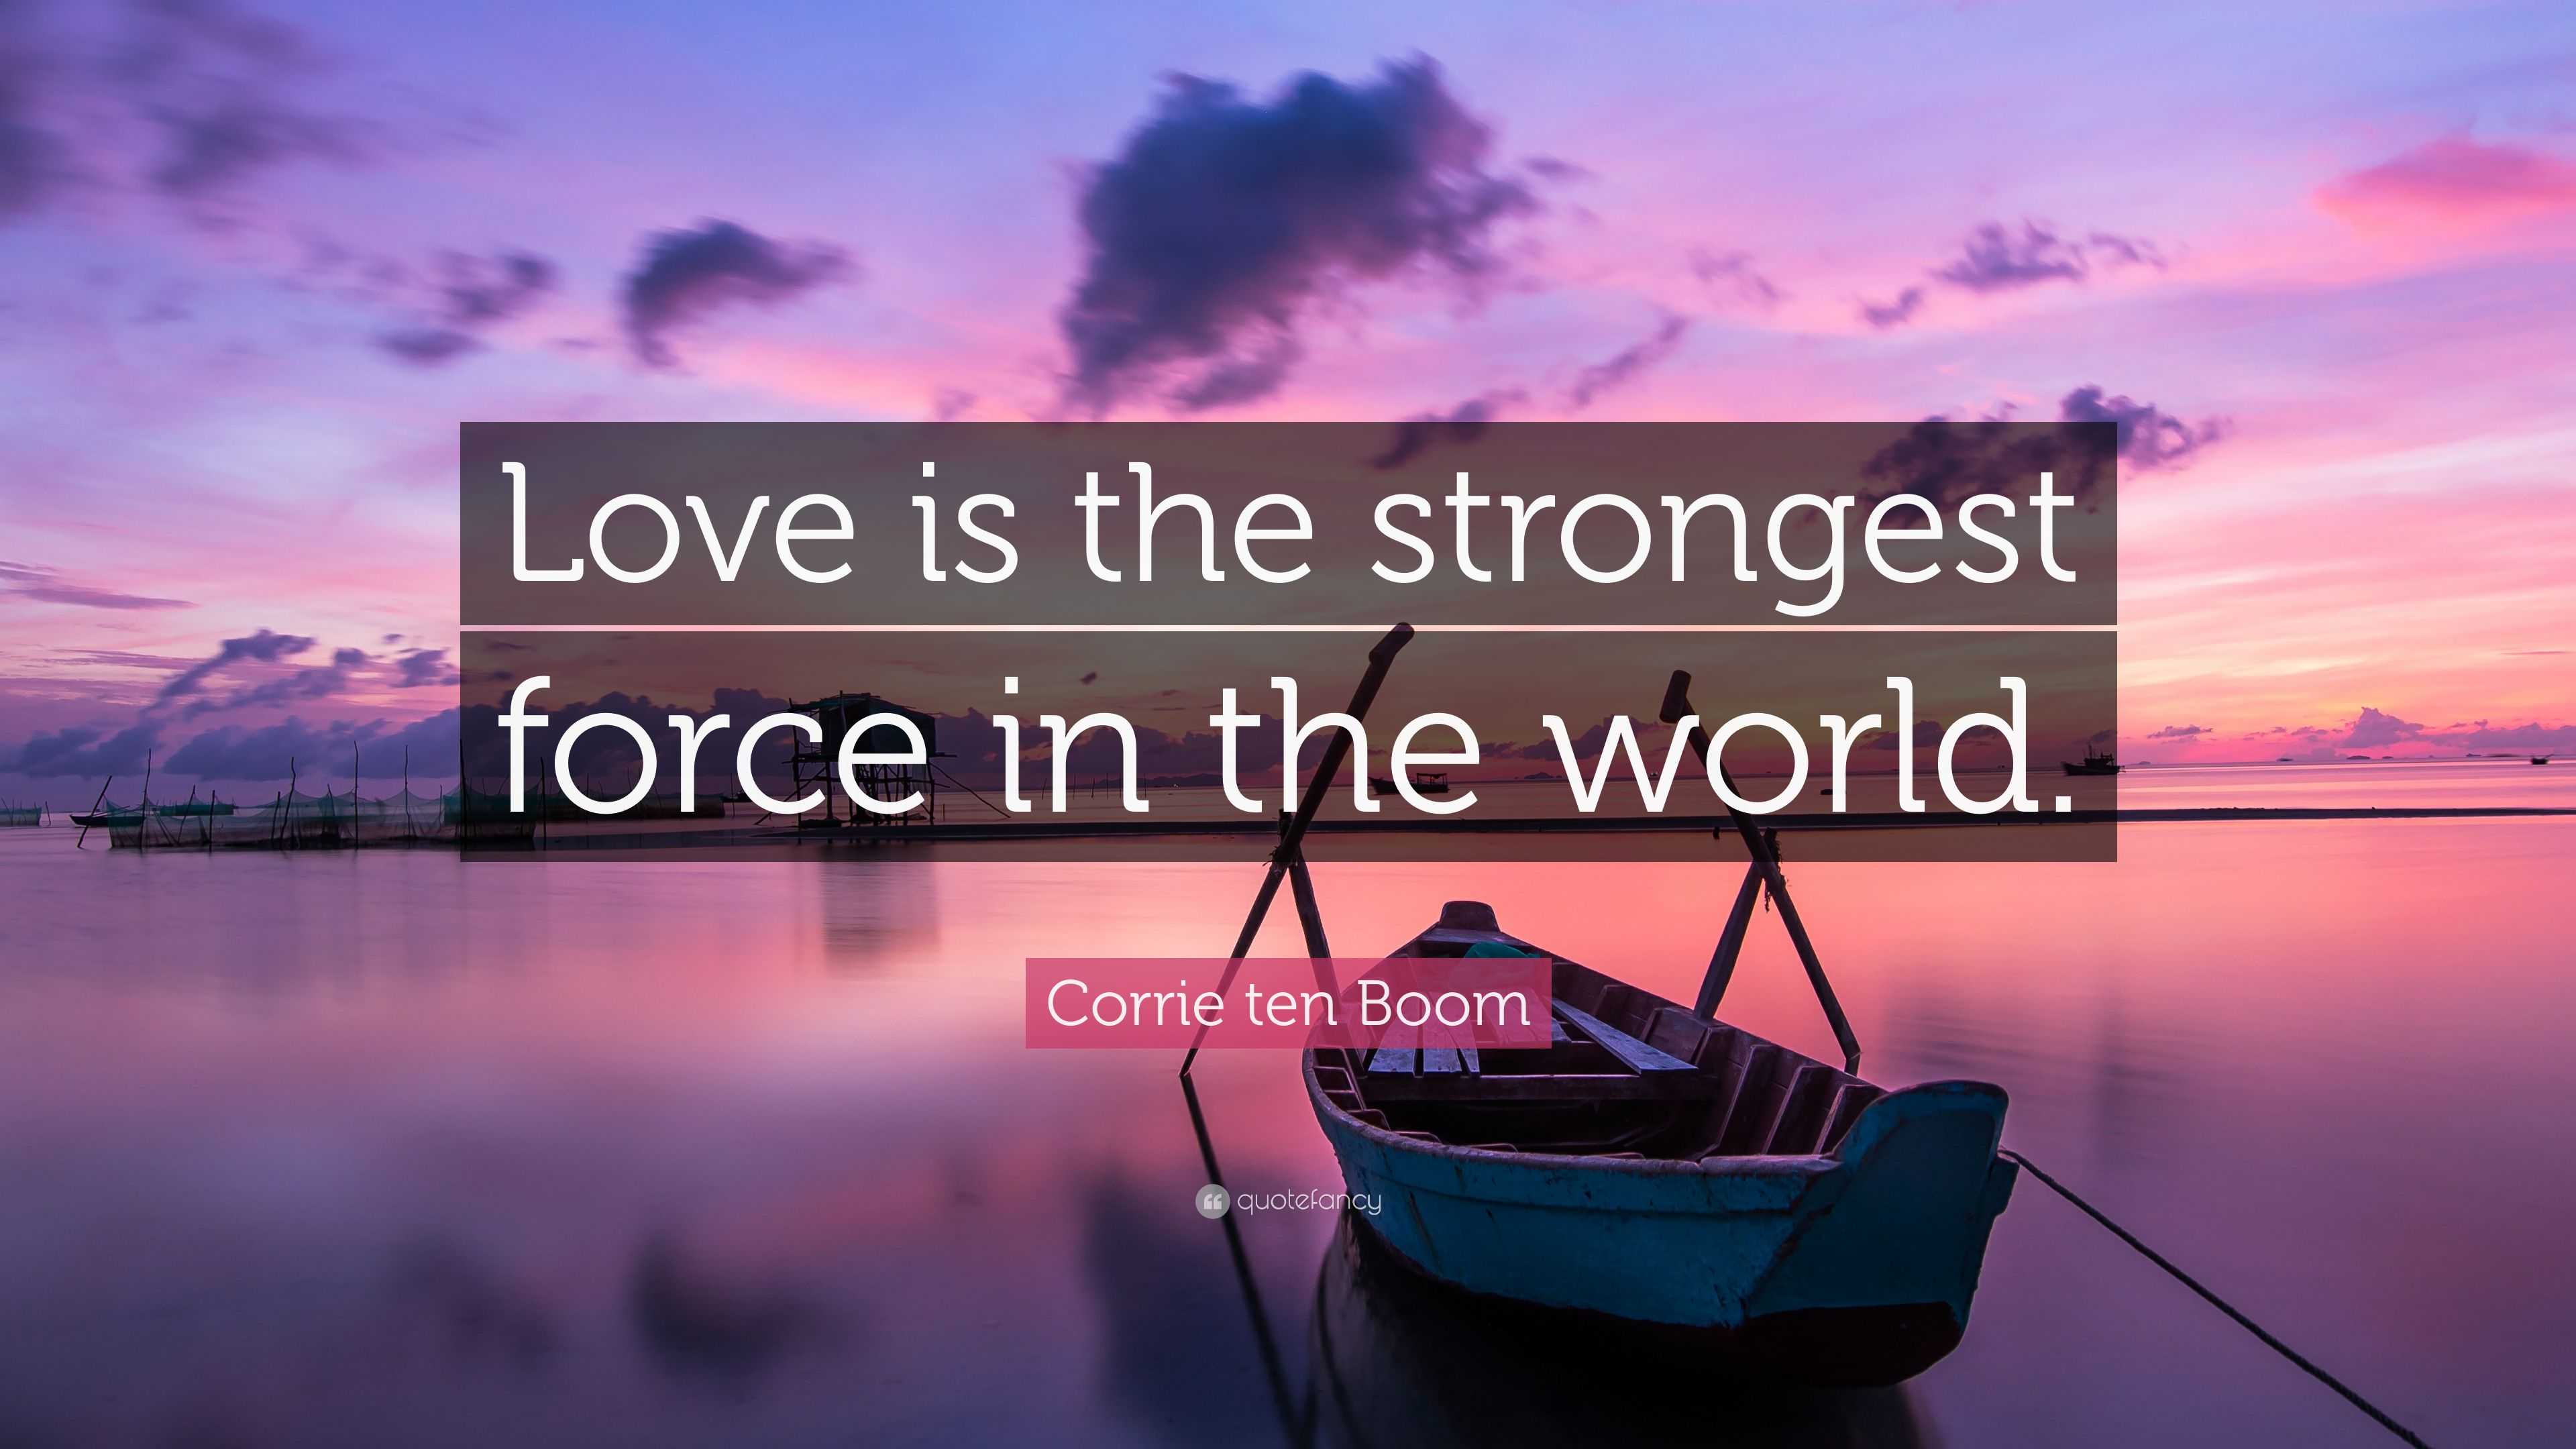 corrie ten boom quotes on love